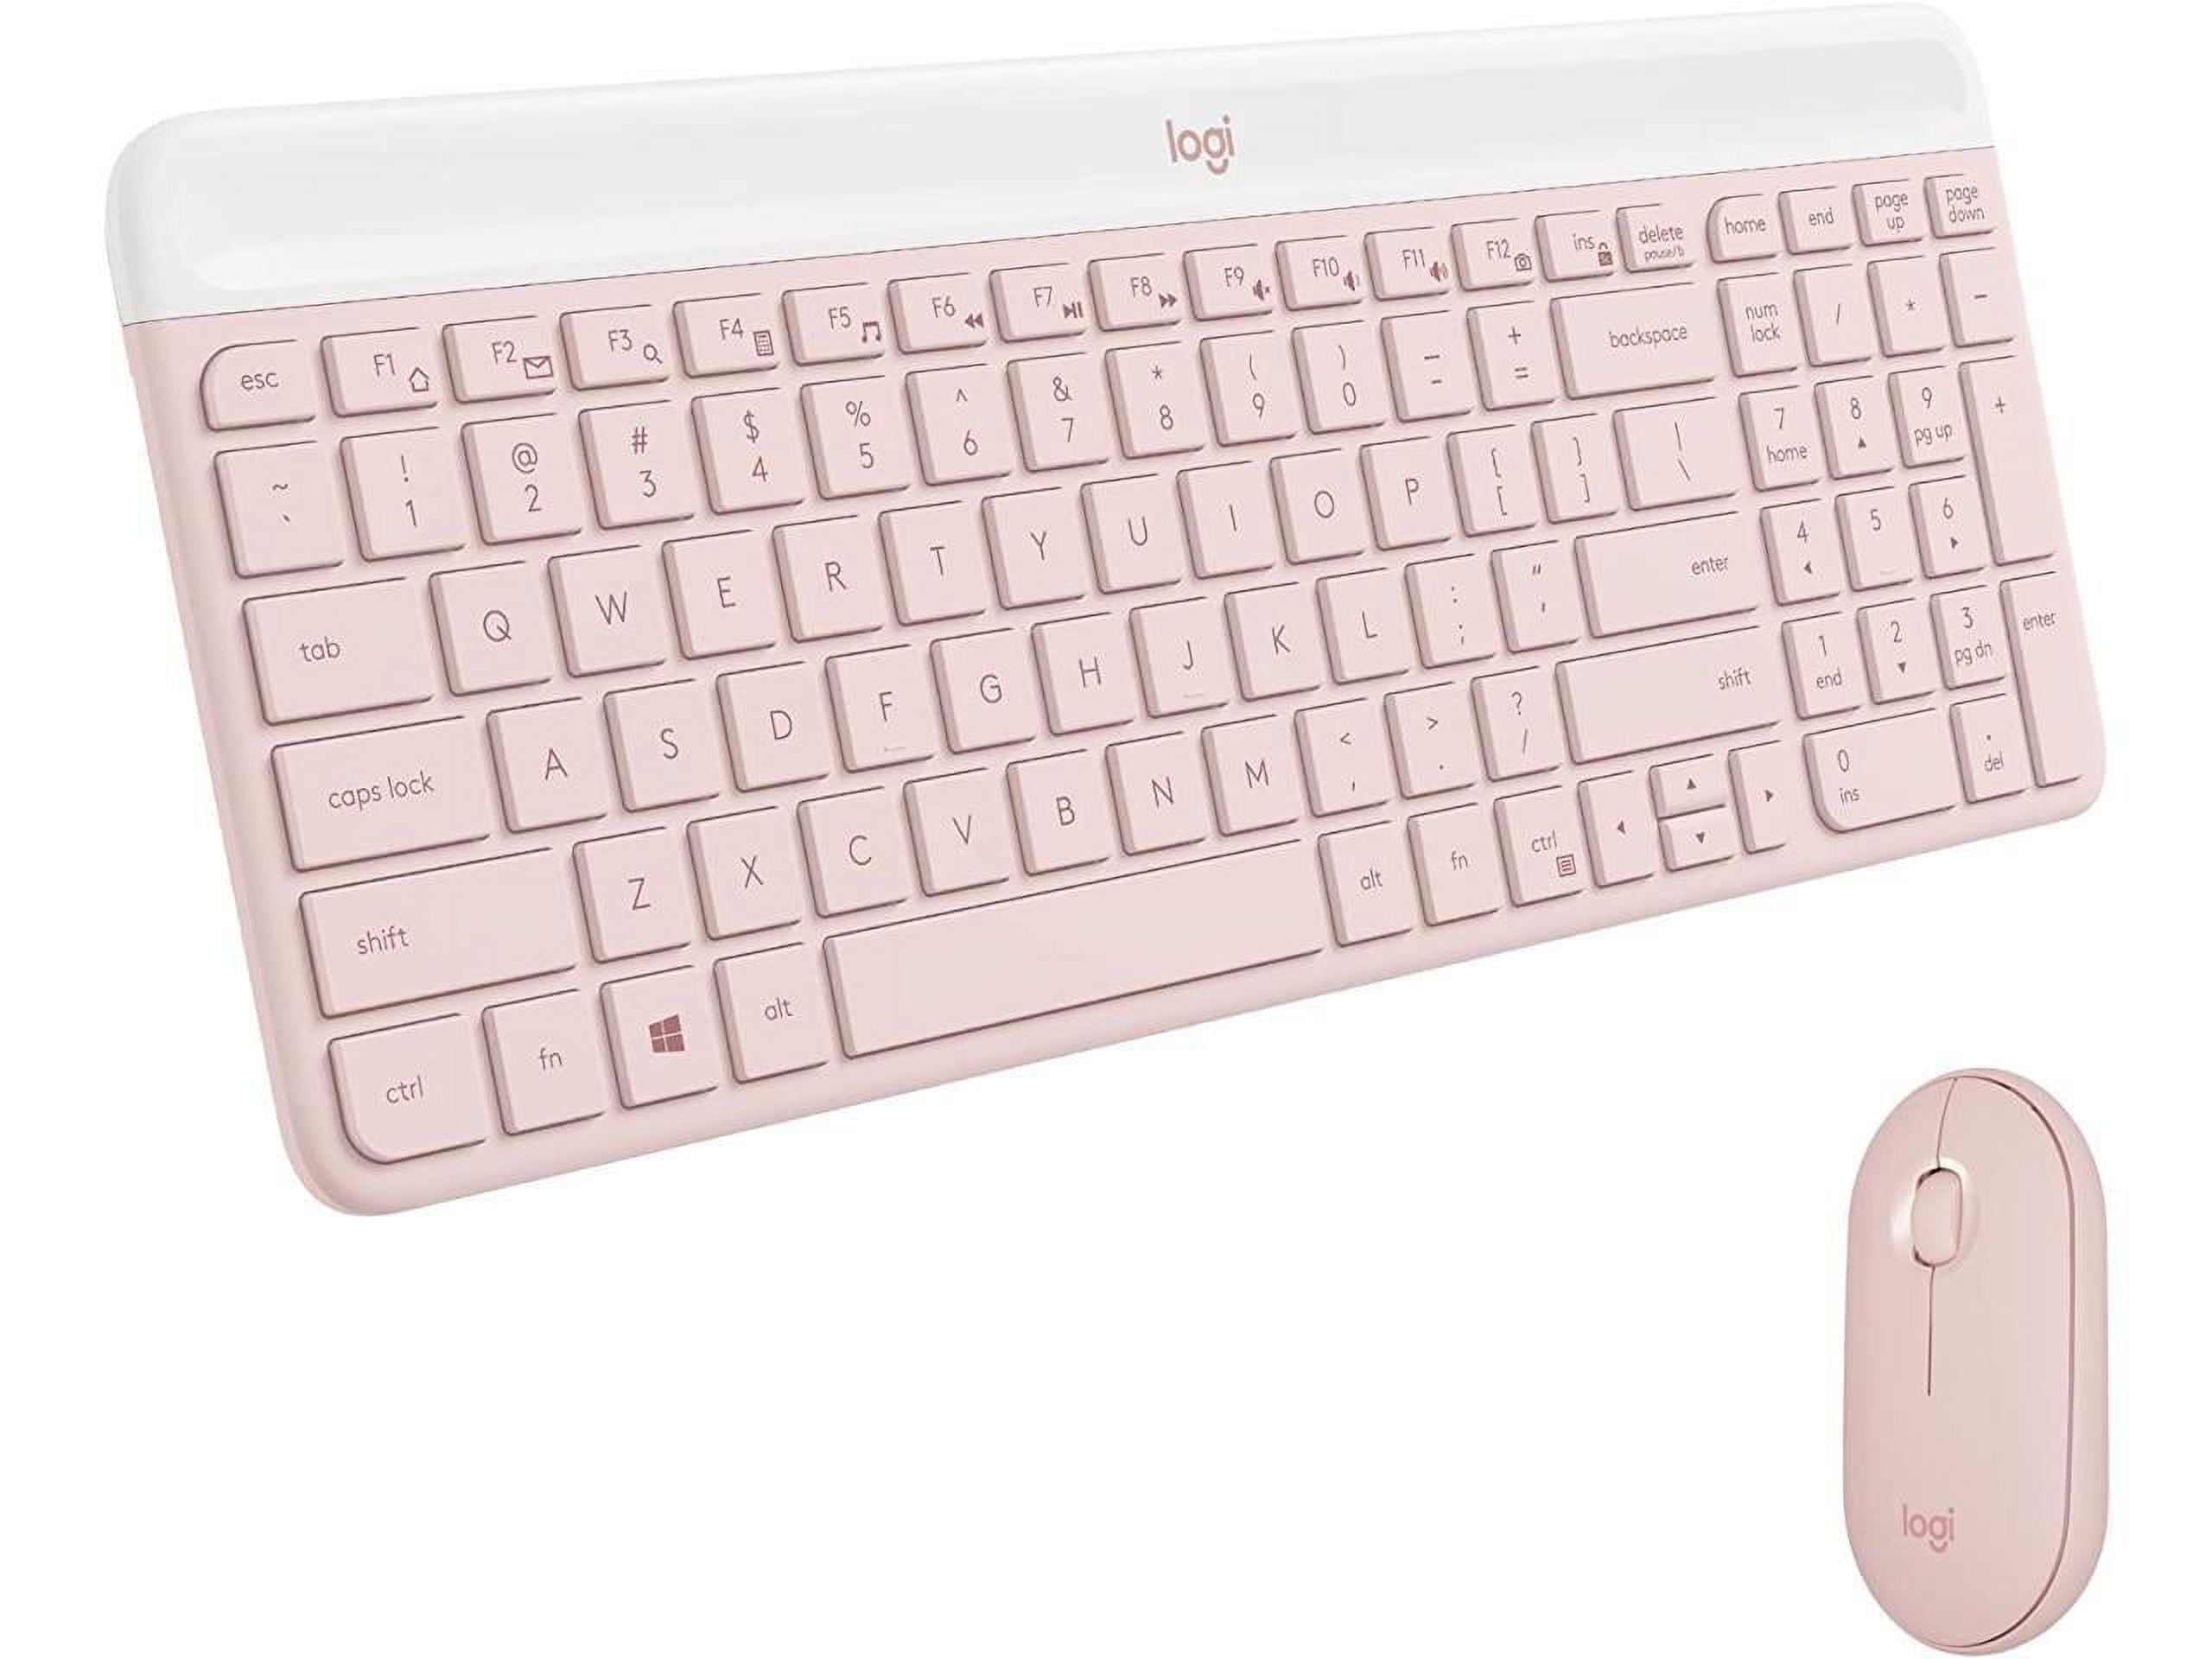 Logitech Slim Wireless Keyboard and Mouse Combo MK470 clavier USB